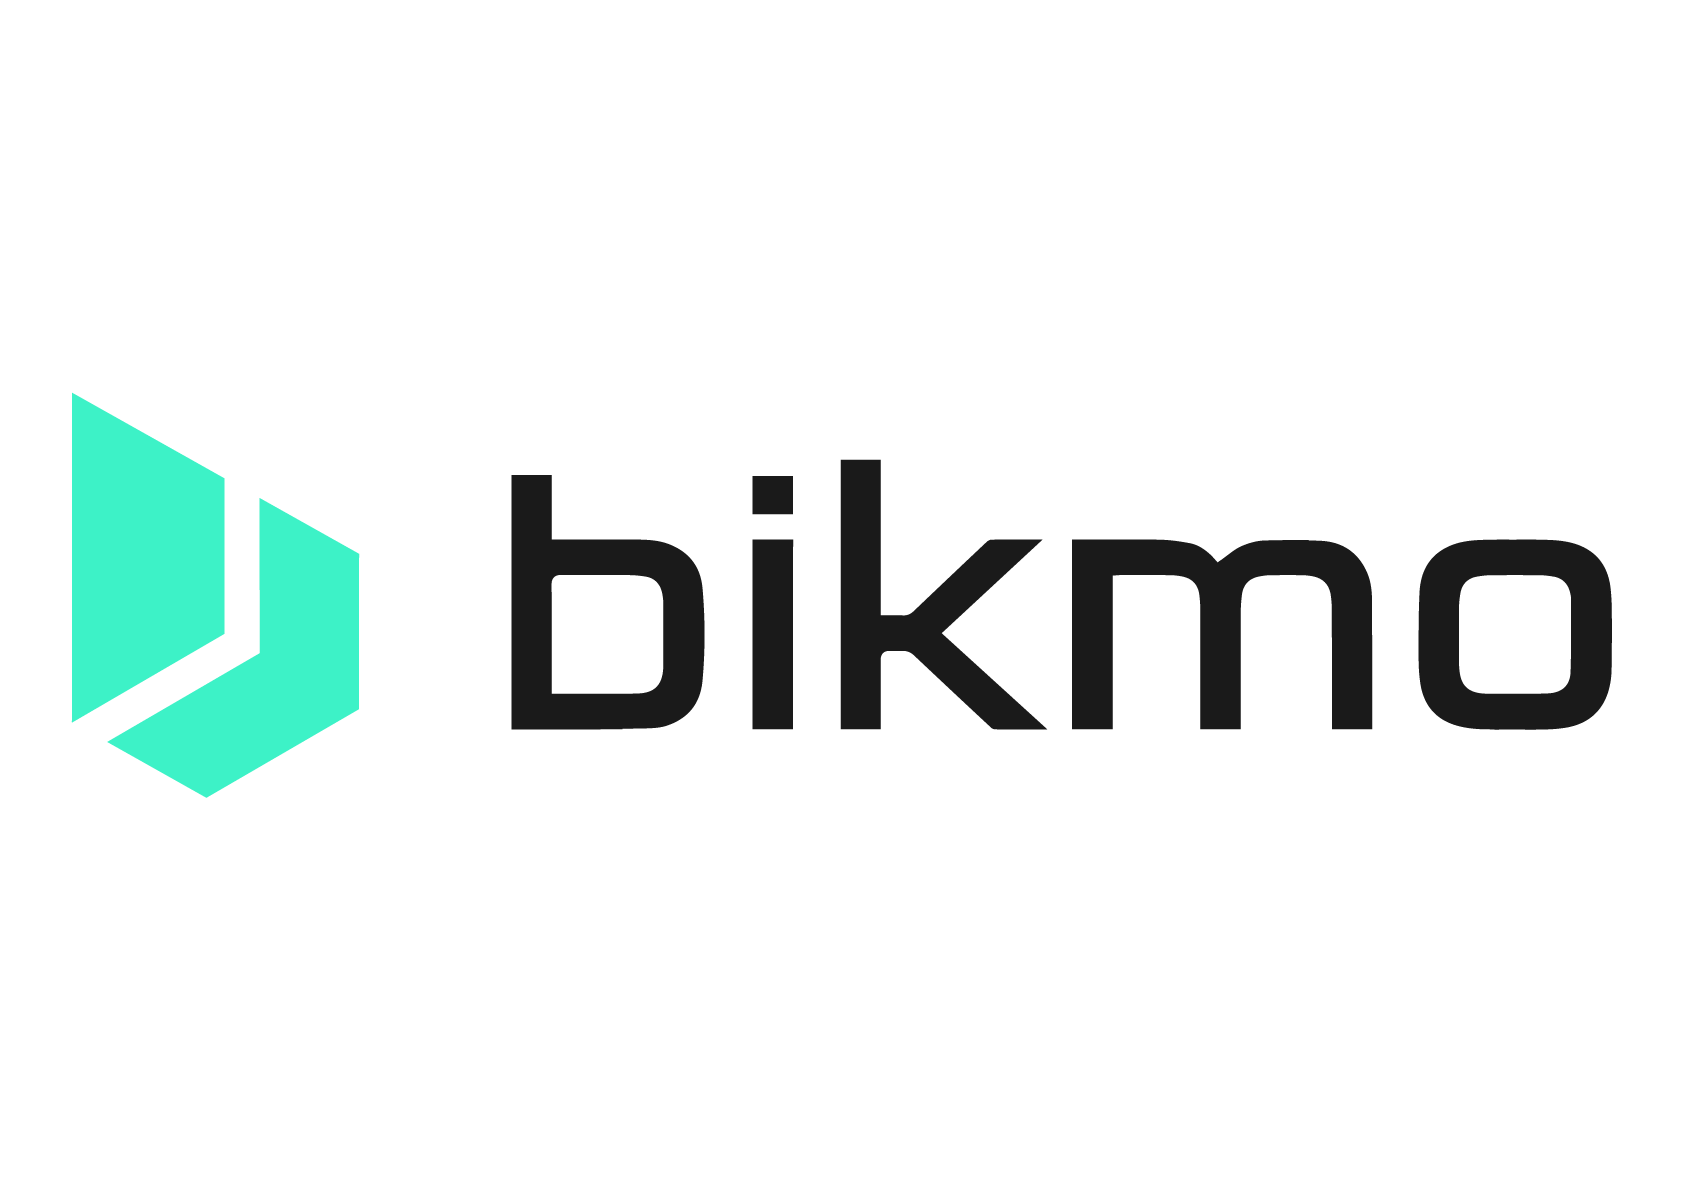 Bikmo Logo